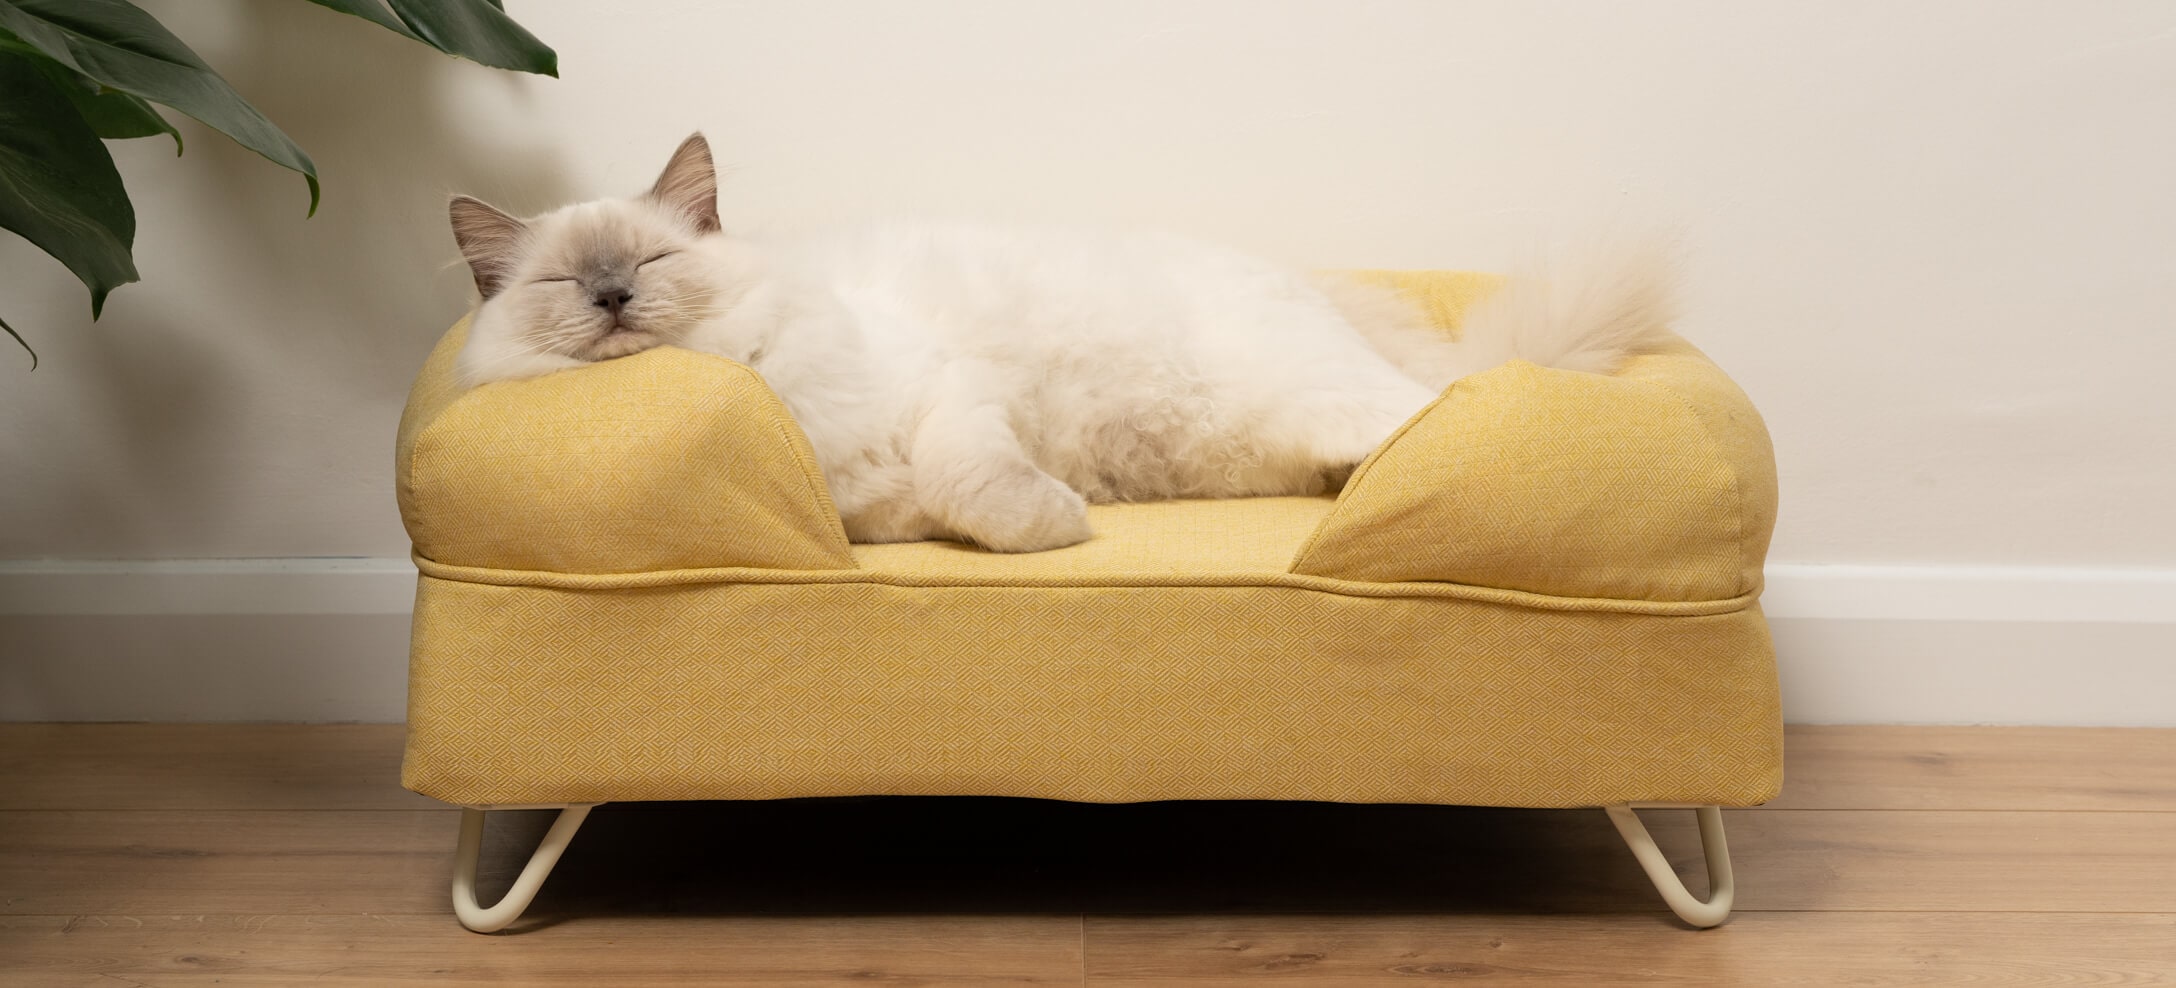 Ragdoll ligt te slapen op gele Bolstermand voor katten